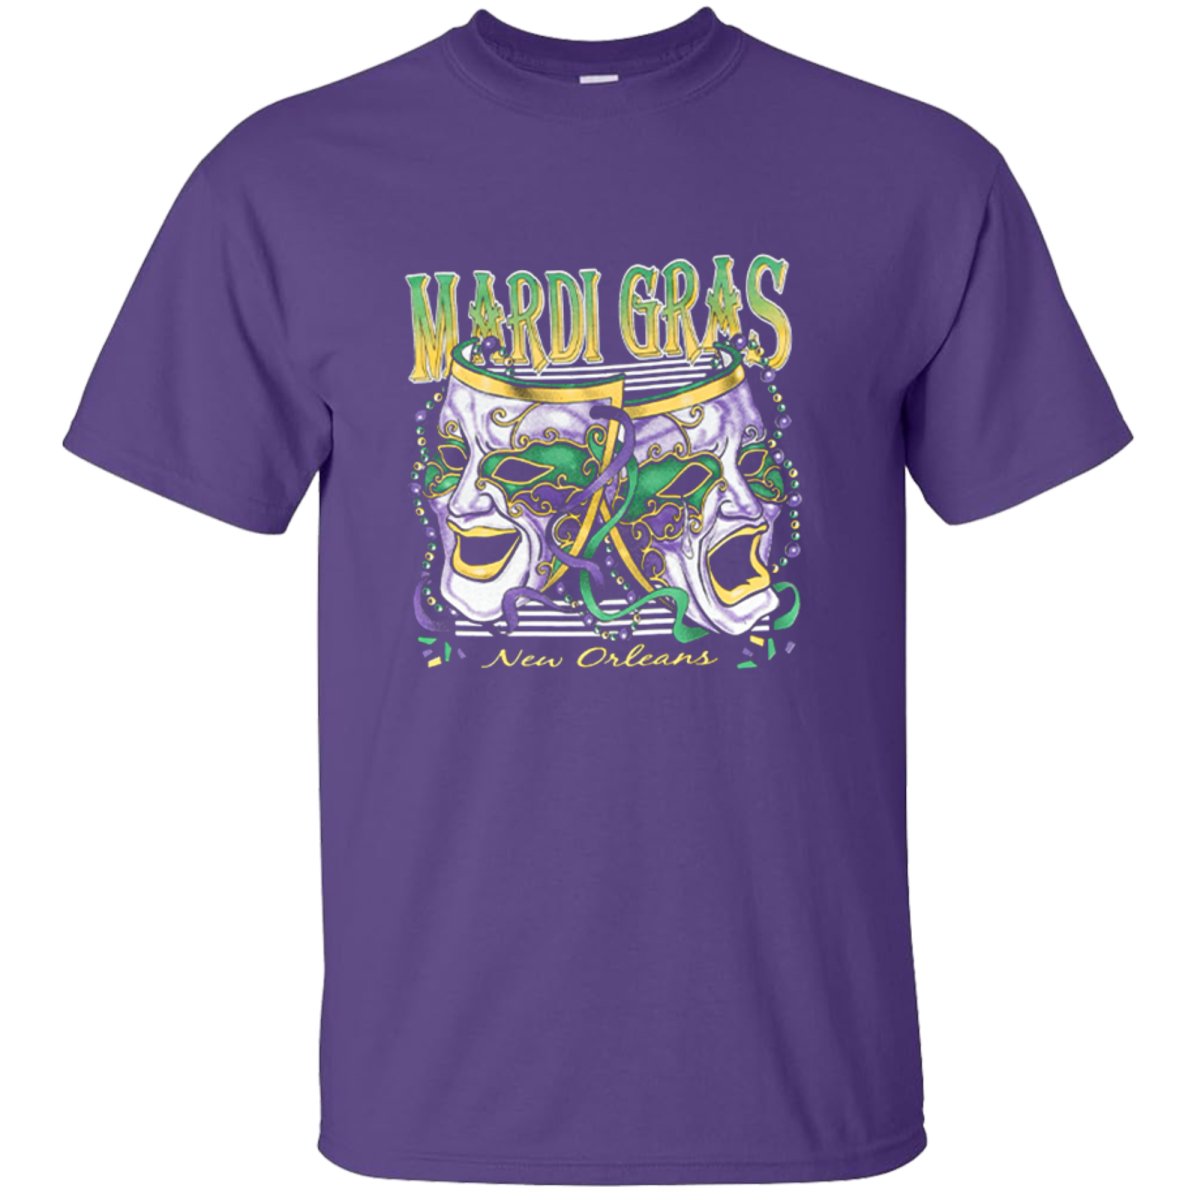 NOLA T-Shirt of the Month Club - These super fun Mardi Gras